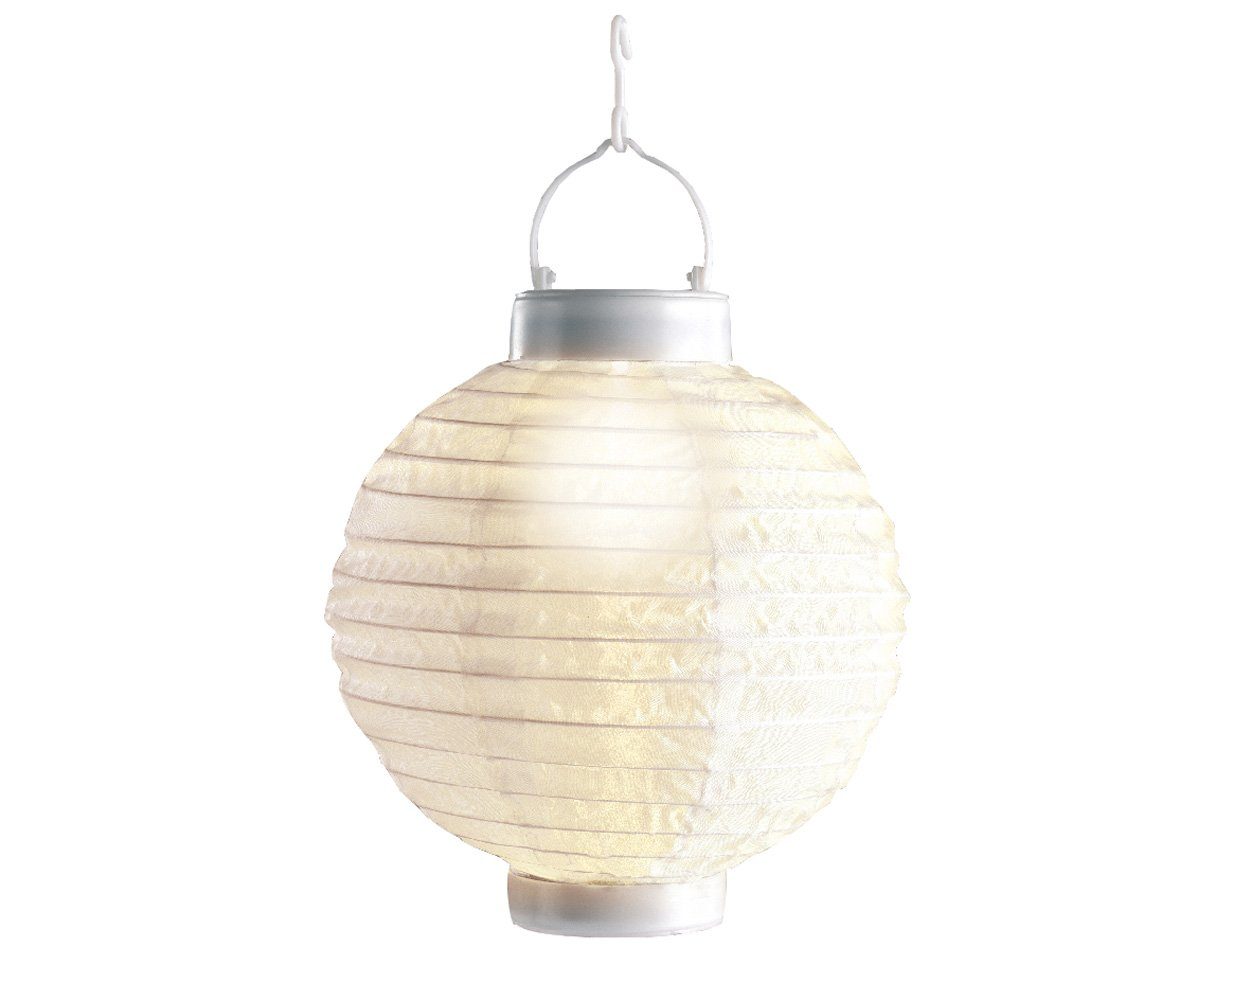 Decoris season decorations LED Solarleuchte, Solar Laterne Outdoor LED  Lampion Nylon Gartenleuchte 20x23cm warmweiß